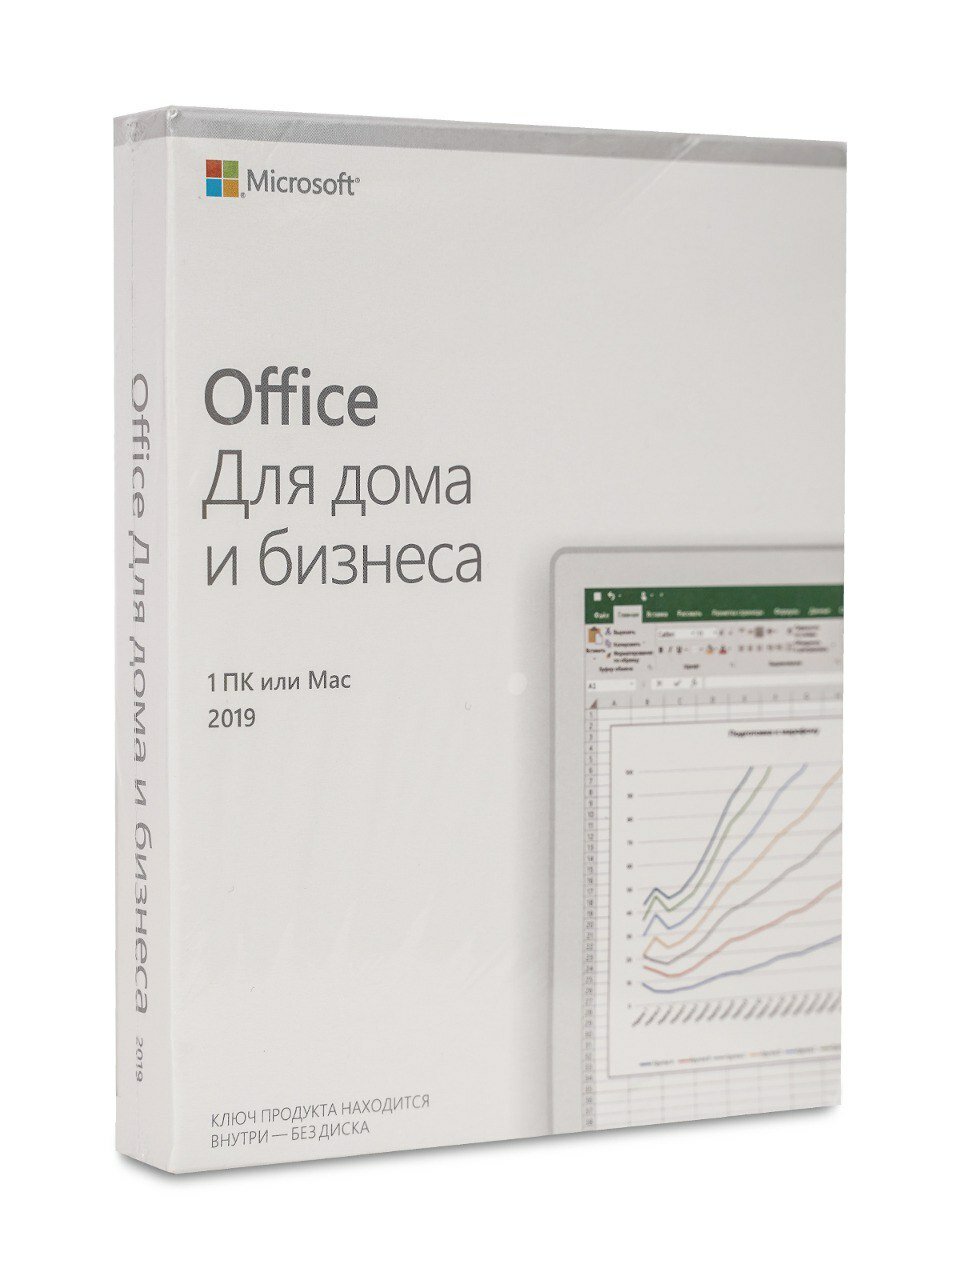 Office Home & Business 2019 BOX 32/64 bit RU 1pc (бессрочная версия, без ограничений) 100% активация